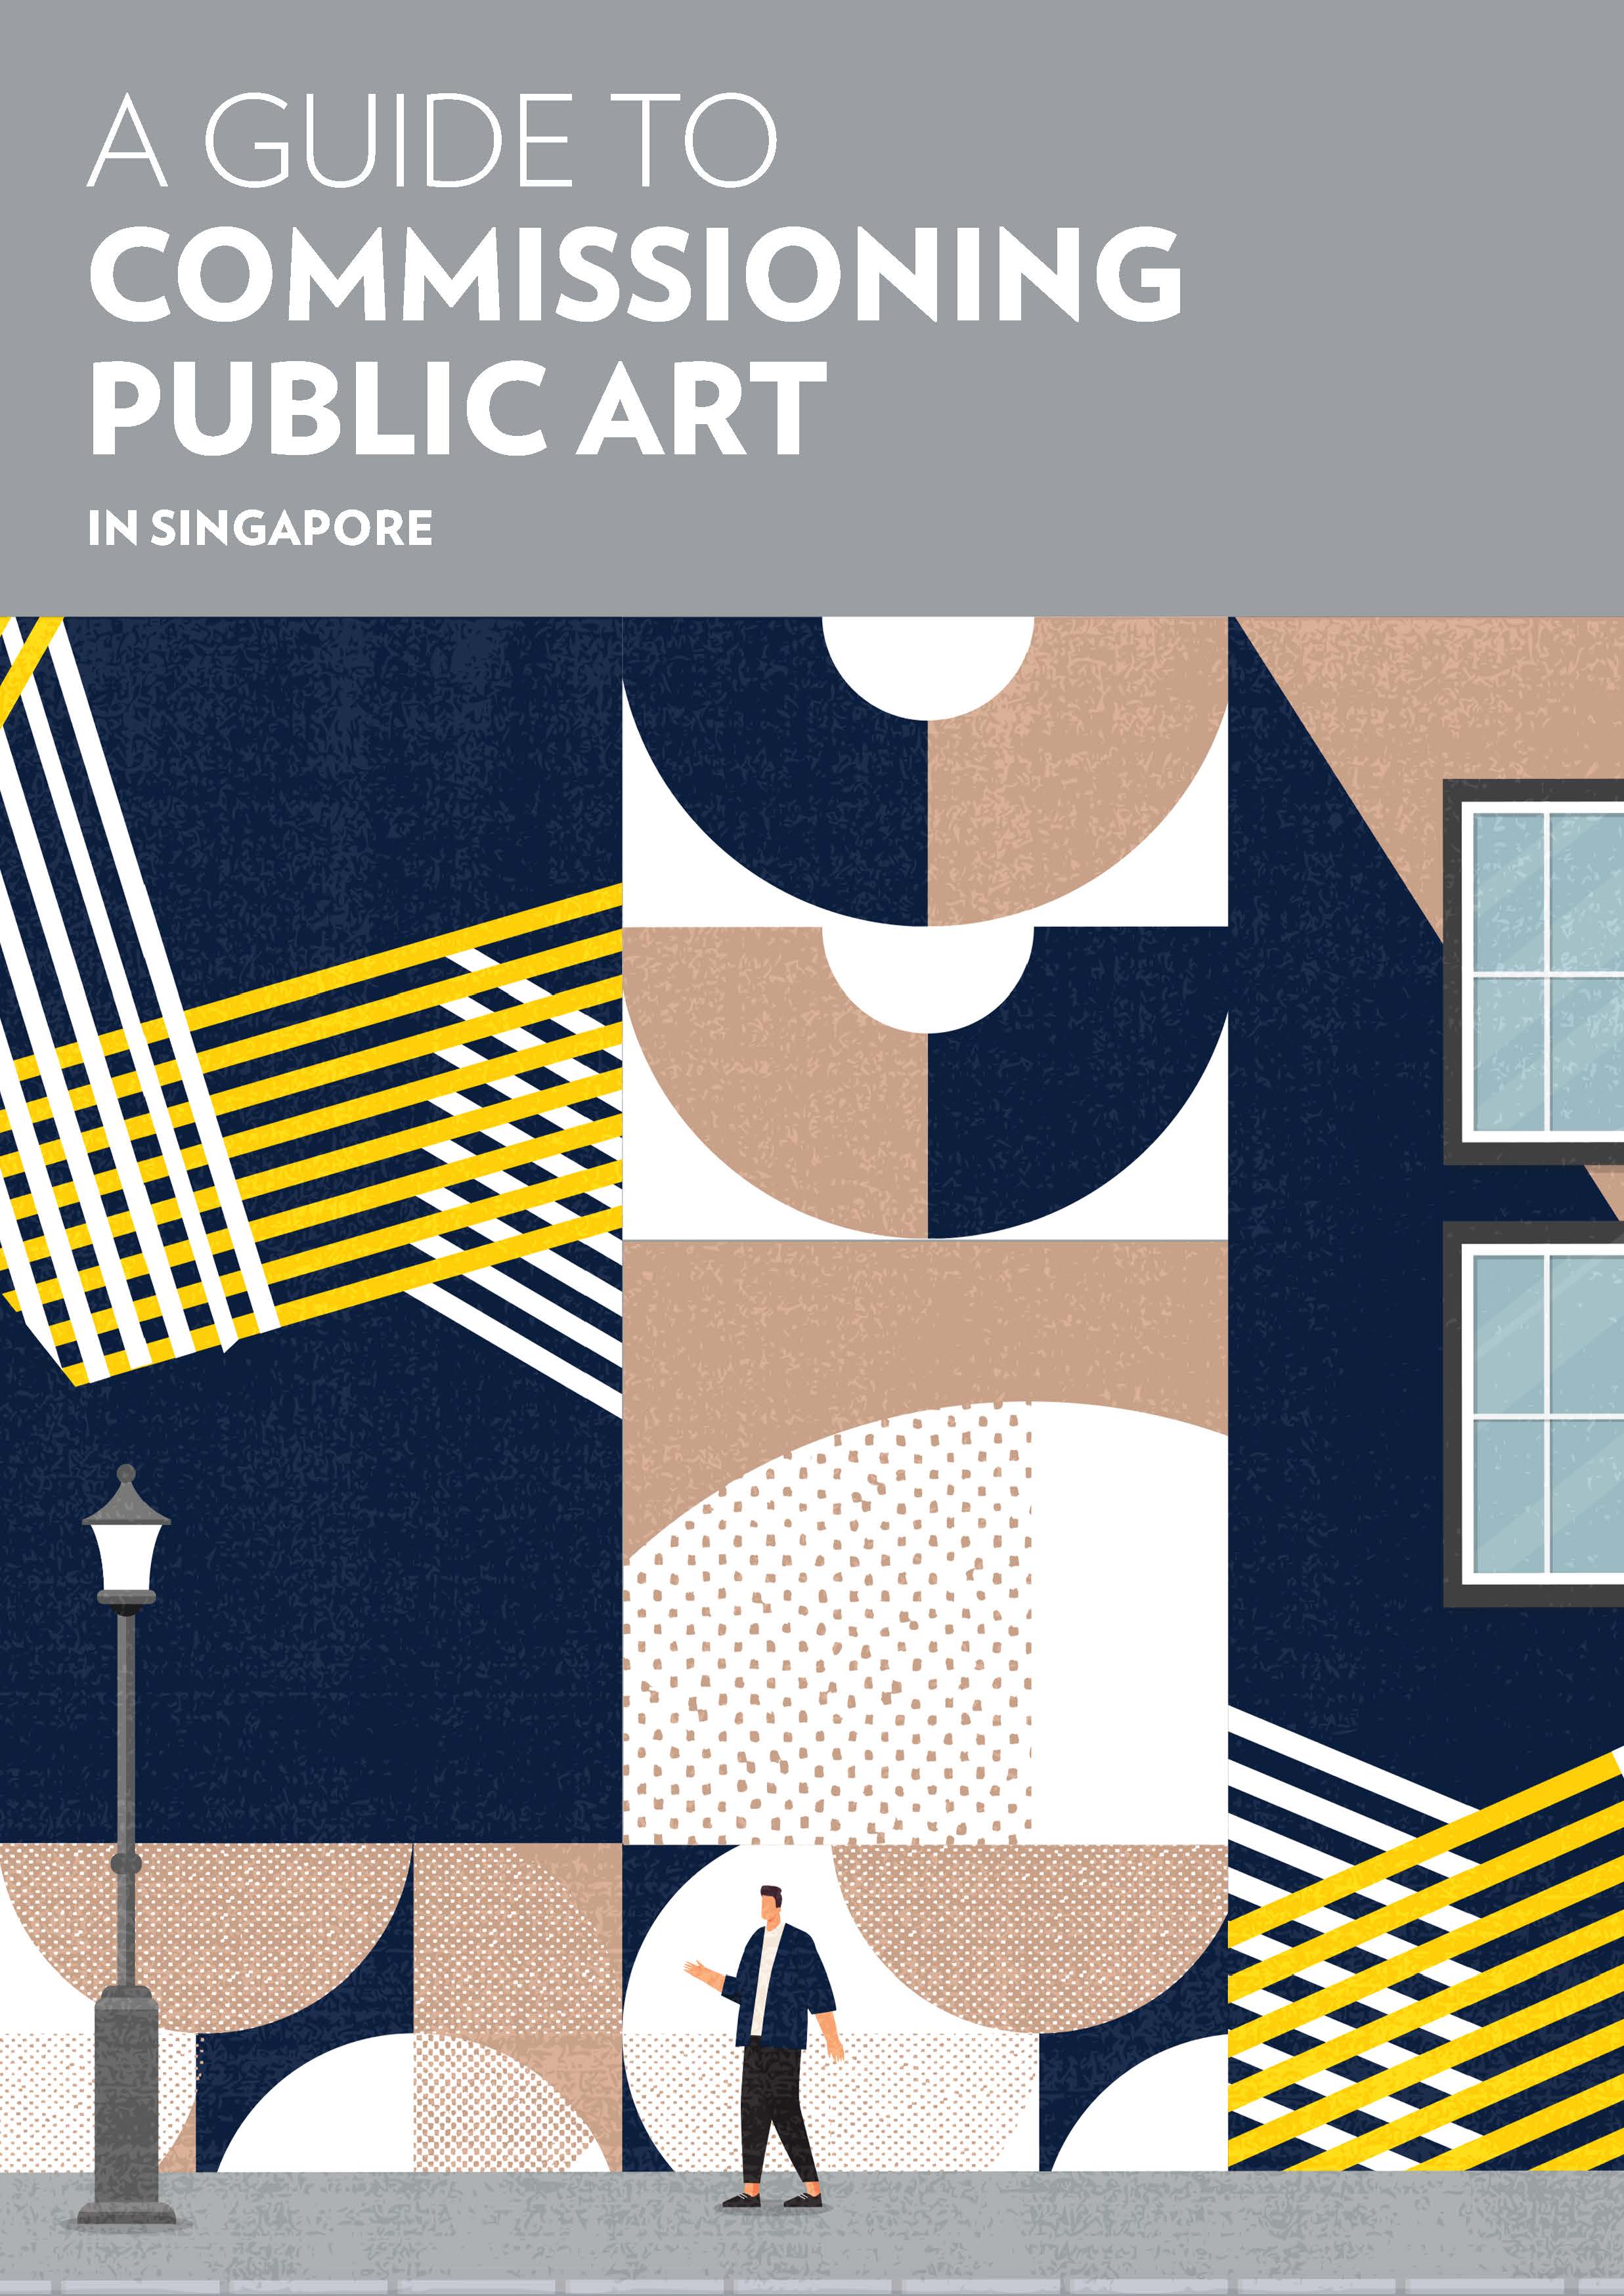 Public Art Trust's Commissioning Guide